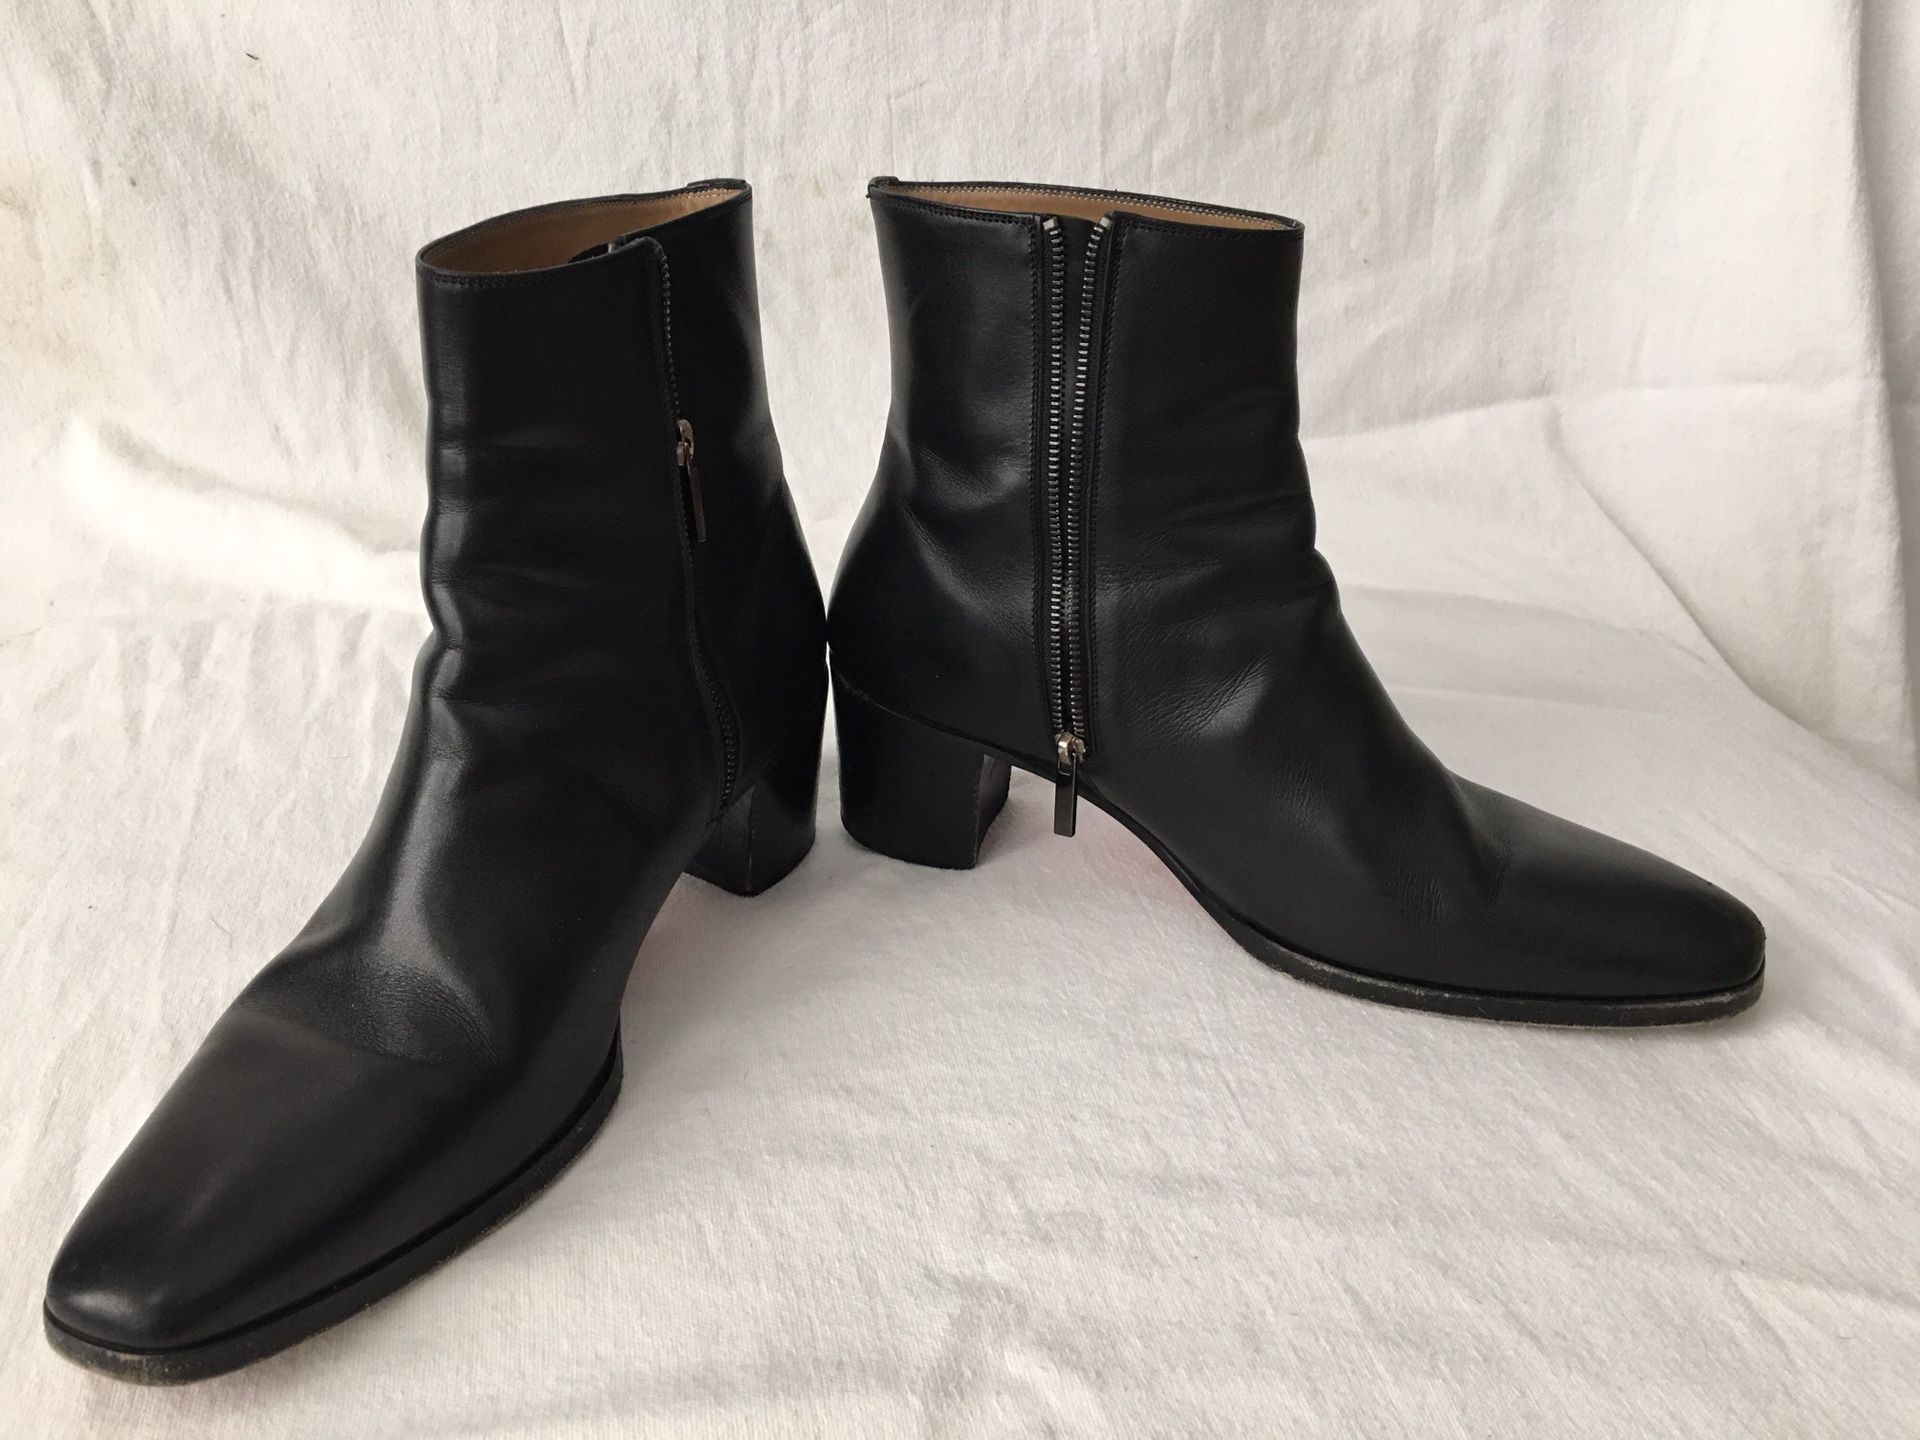 Men’s Christian Louboutin “Gades” Boots Size 12.5